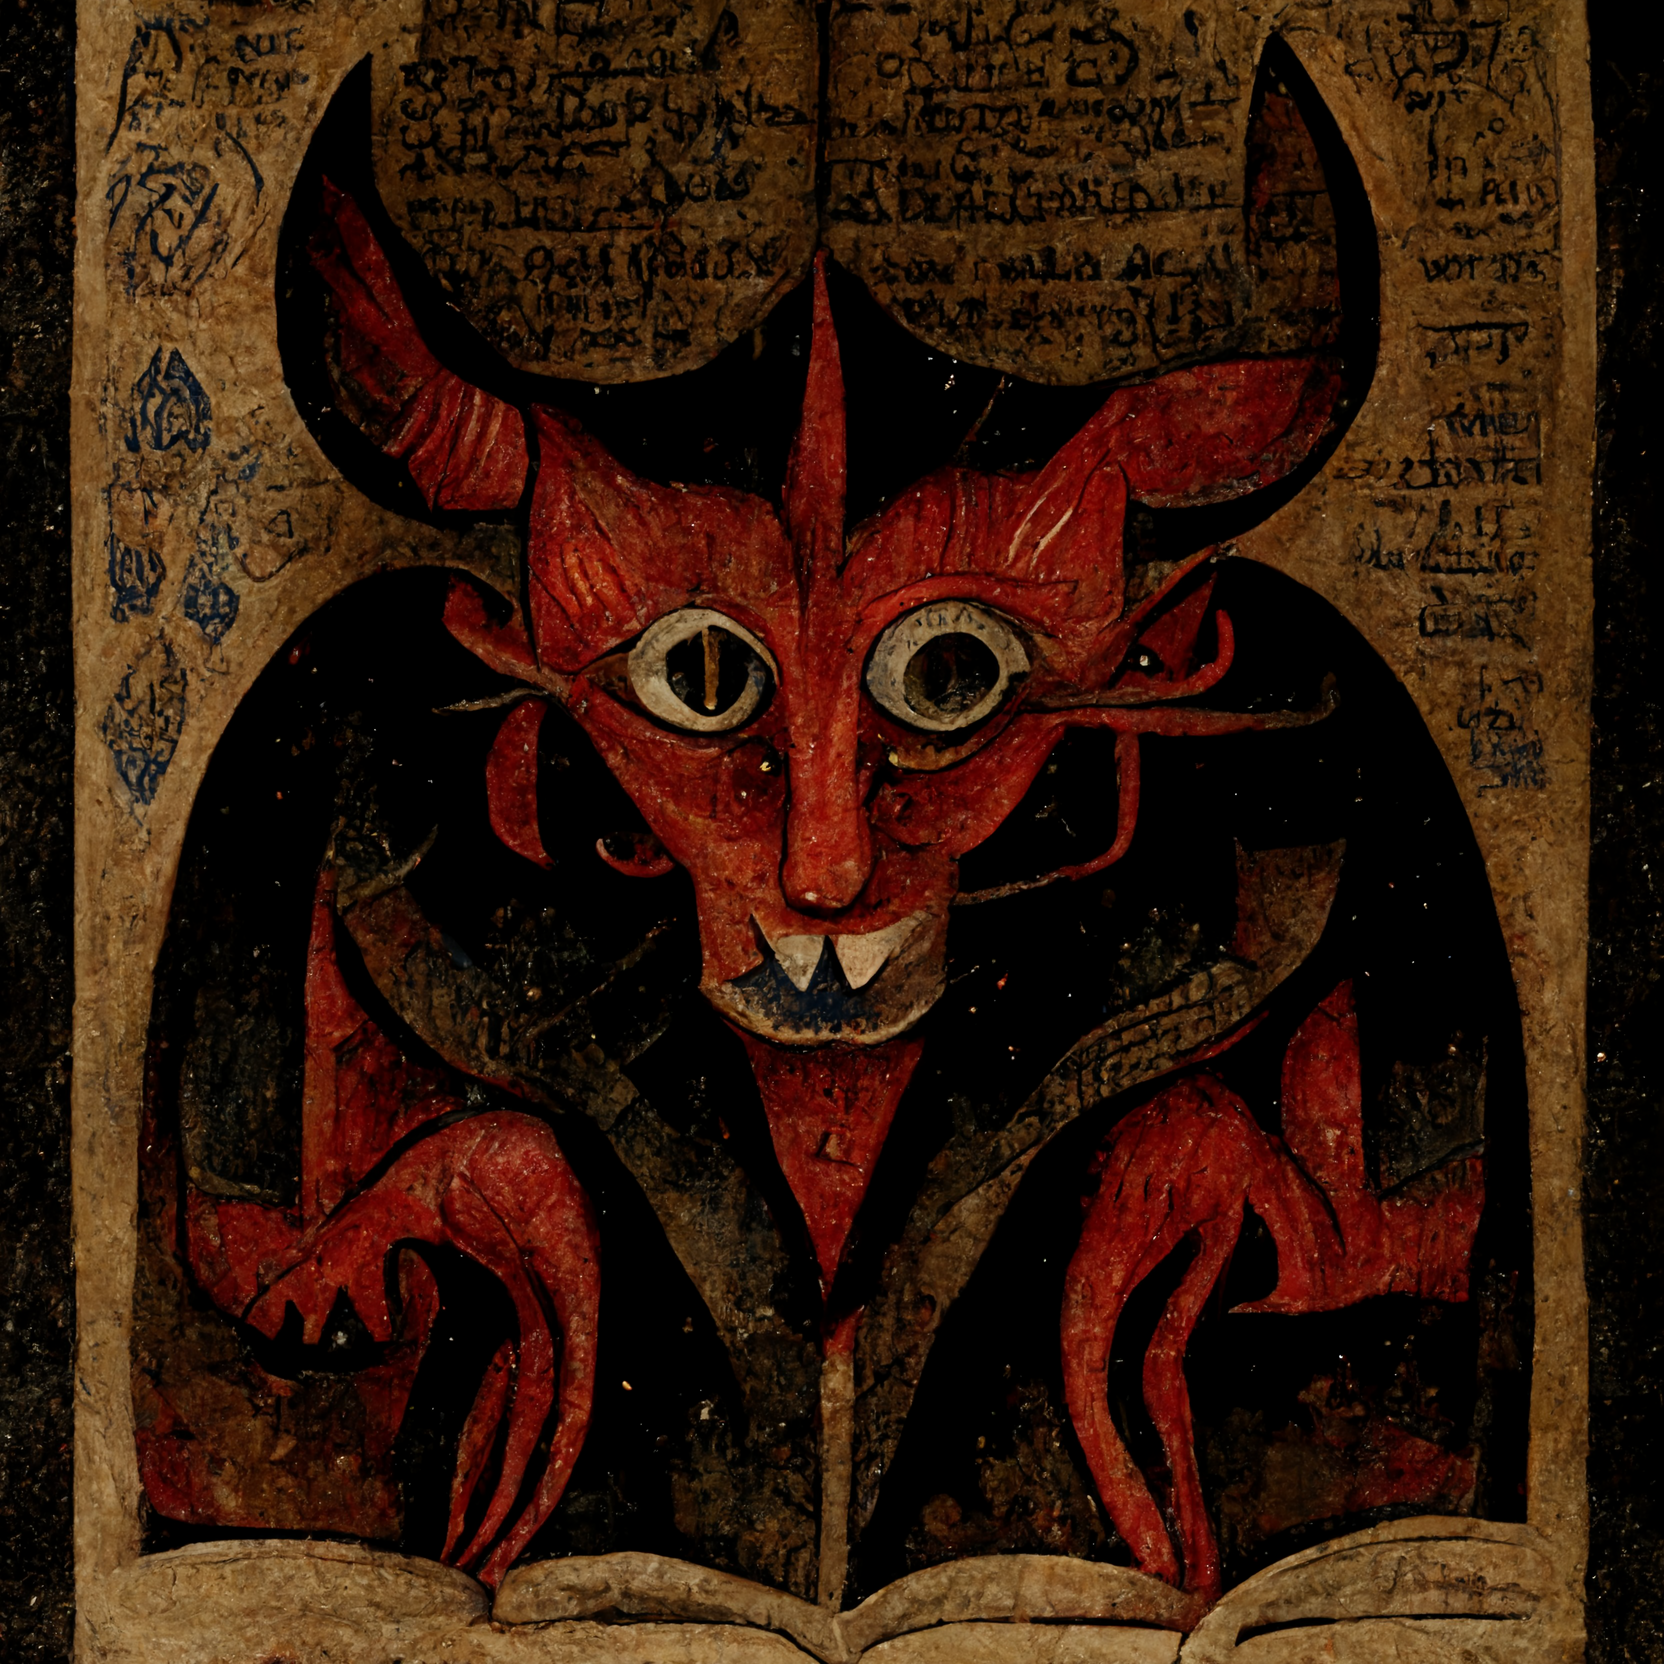 Ulysses_Black_devil_in_the_style_of_a_medieval_manuscript_dcb7d266-e1e6-482c-929c-c8a13379a4b1.png